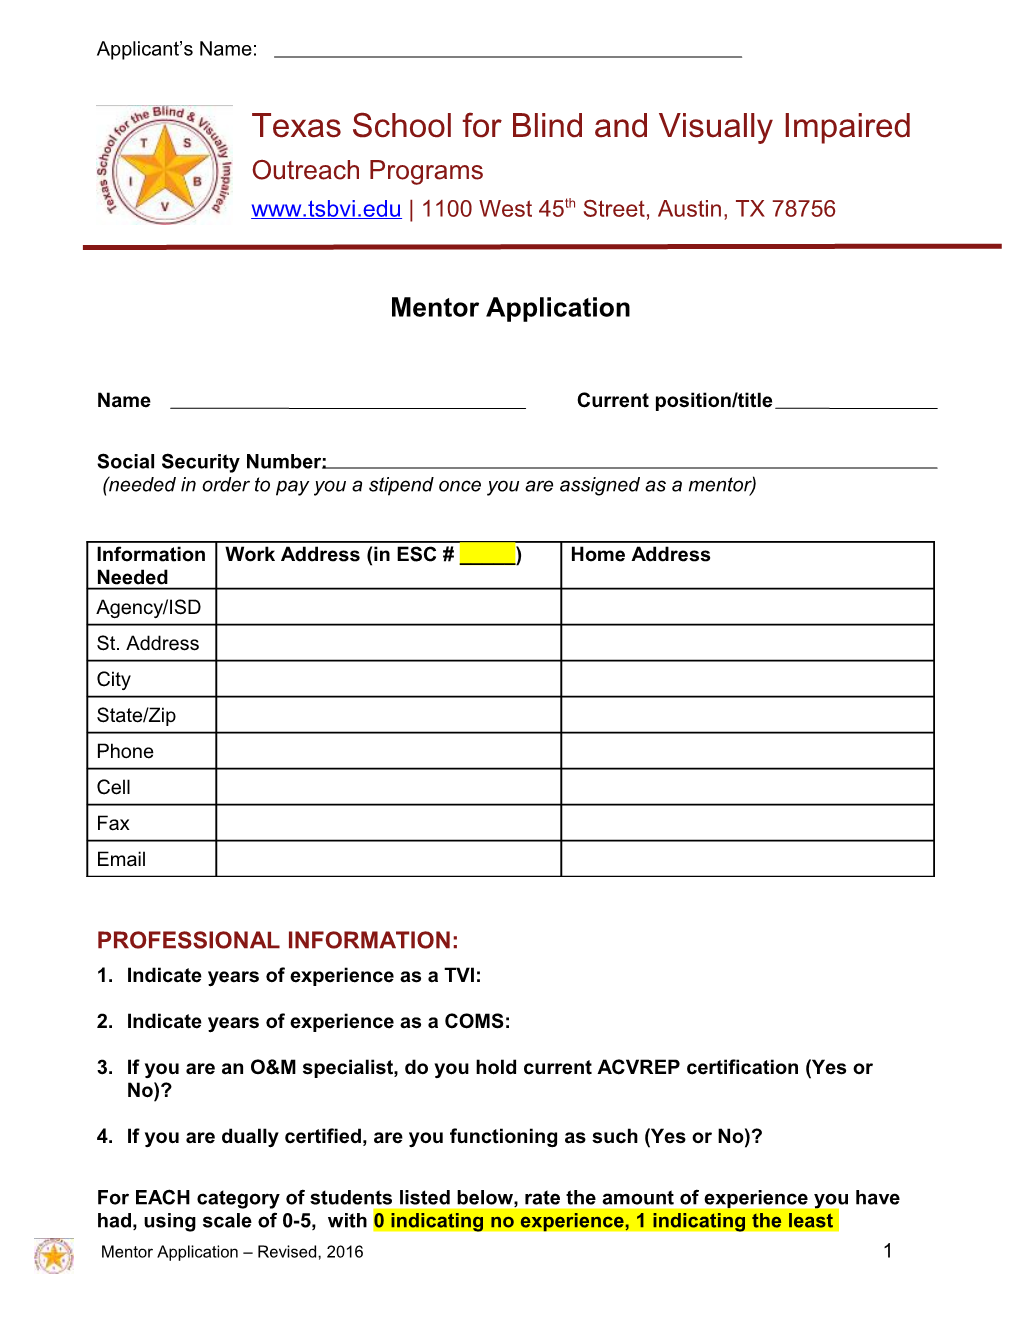 Mentor Application s1